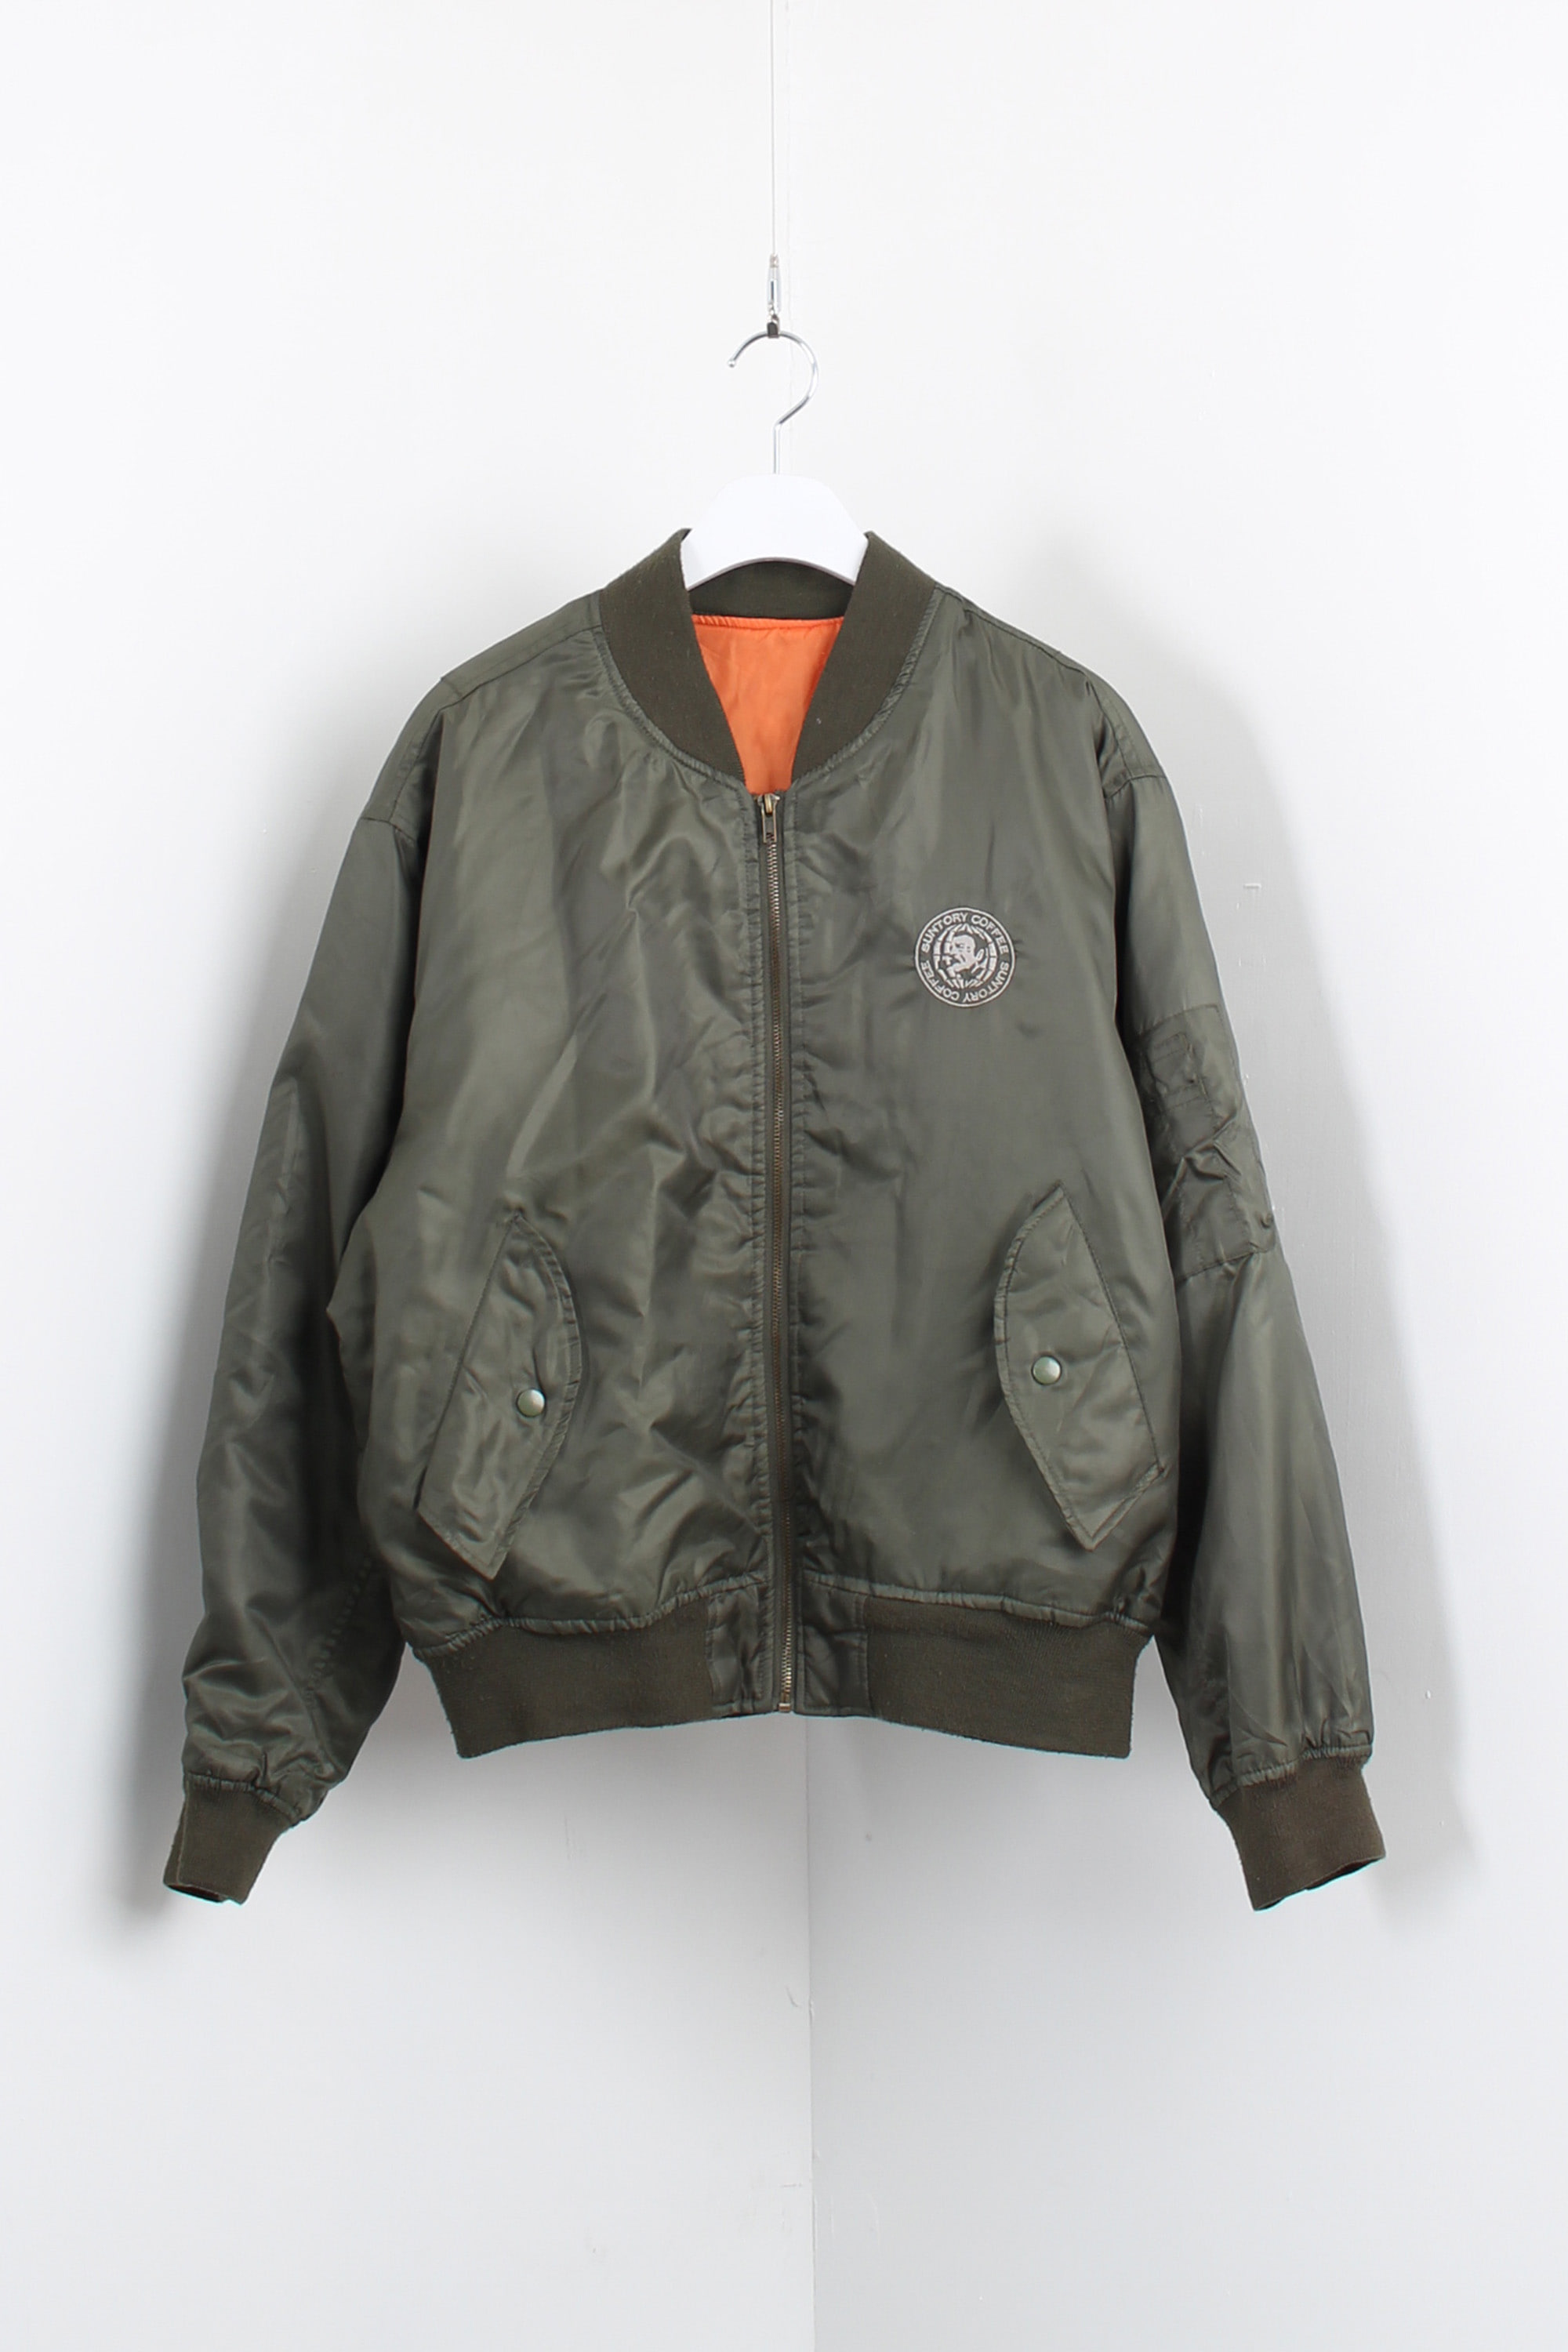 suntory boss MA-1 jacket